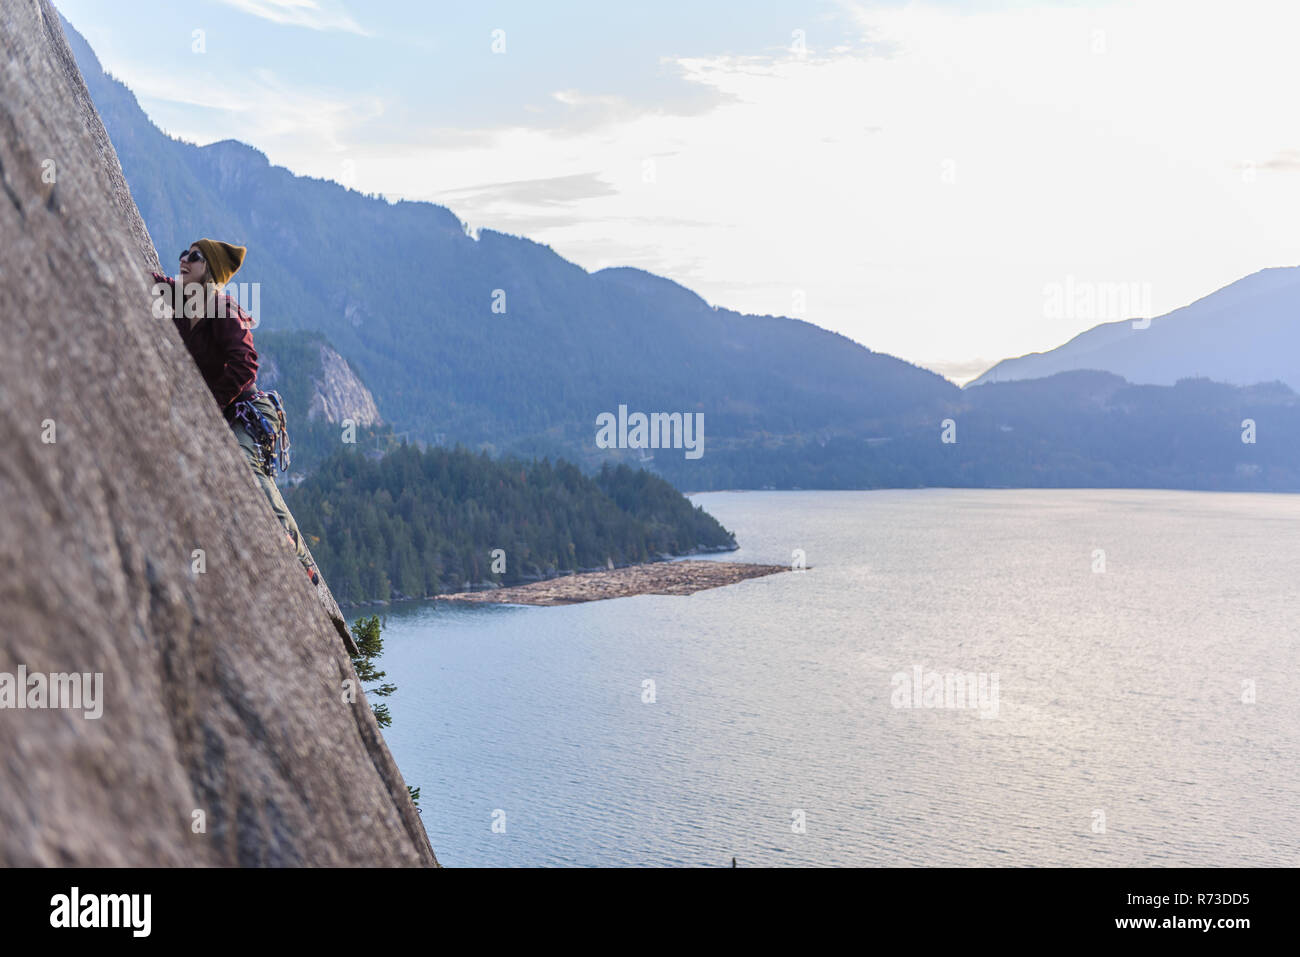 Rock climber sur Malamute, Squamish, Canada Banque D'Images